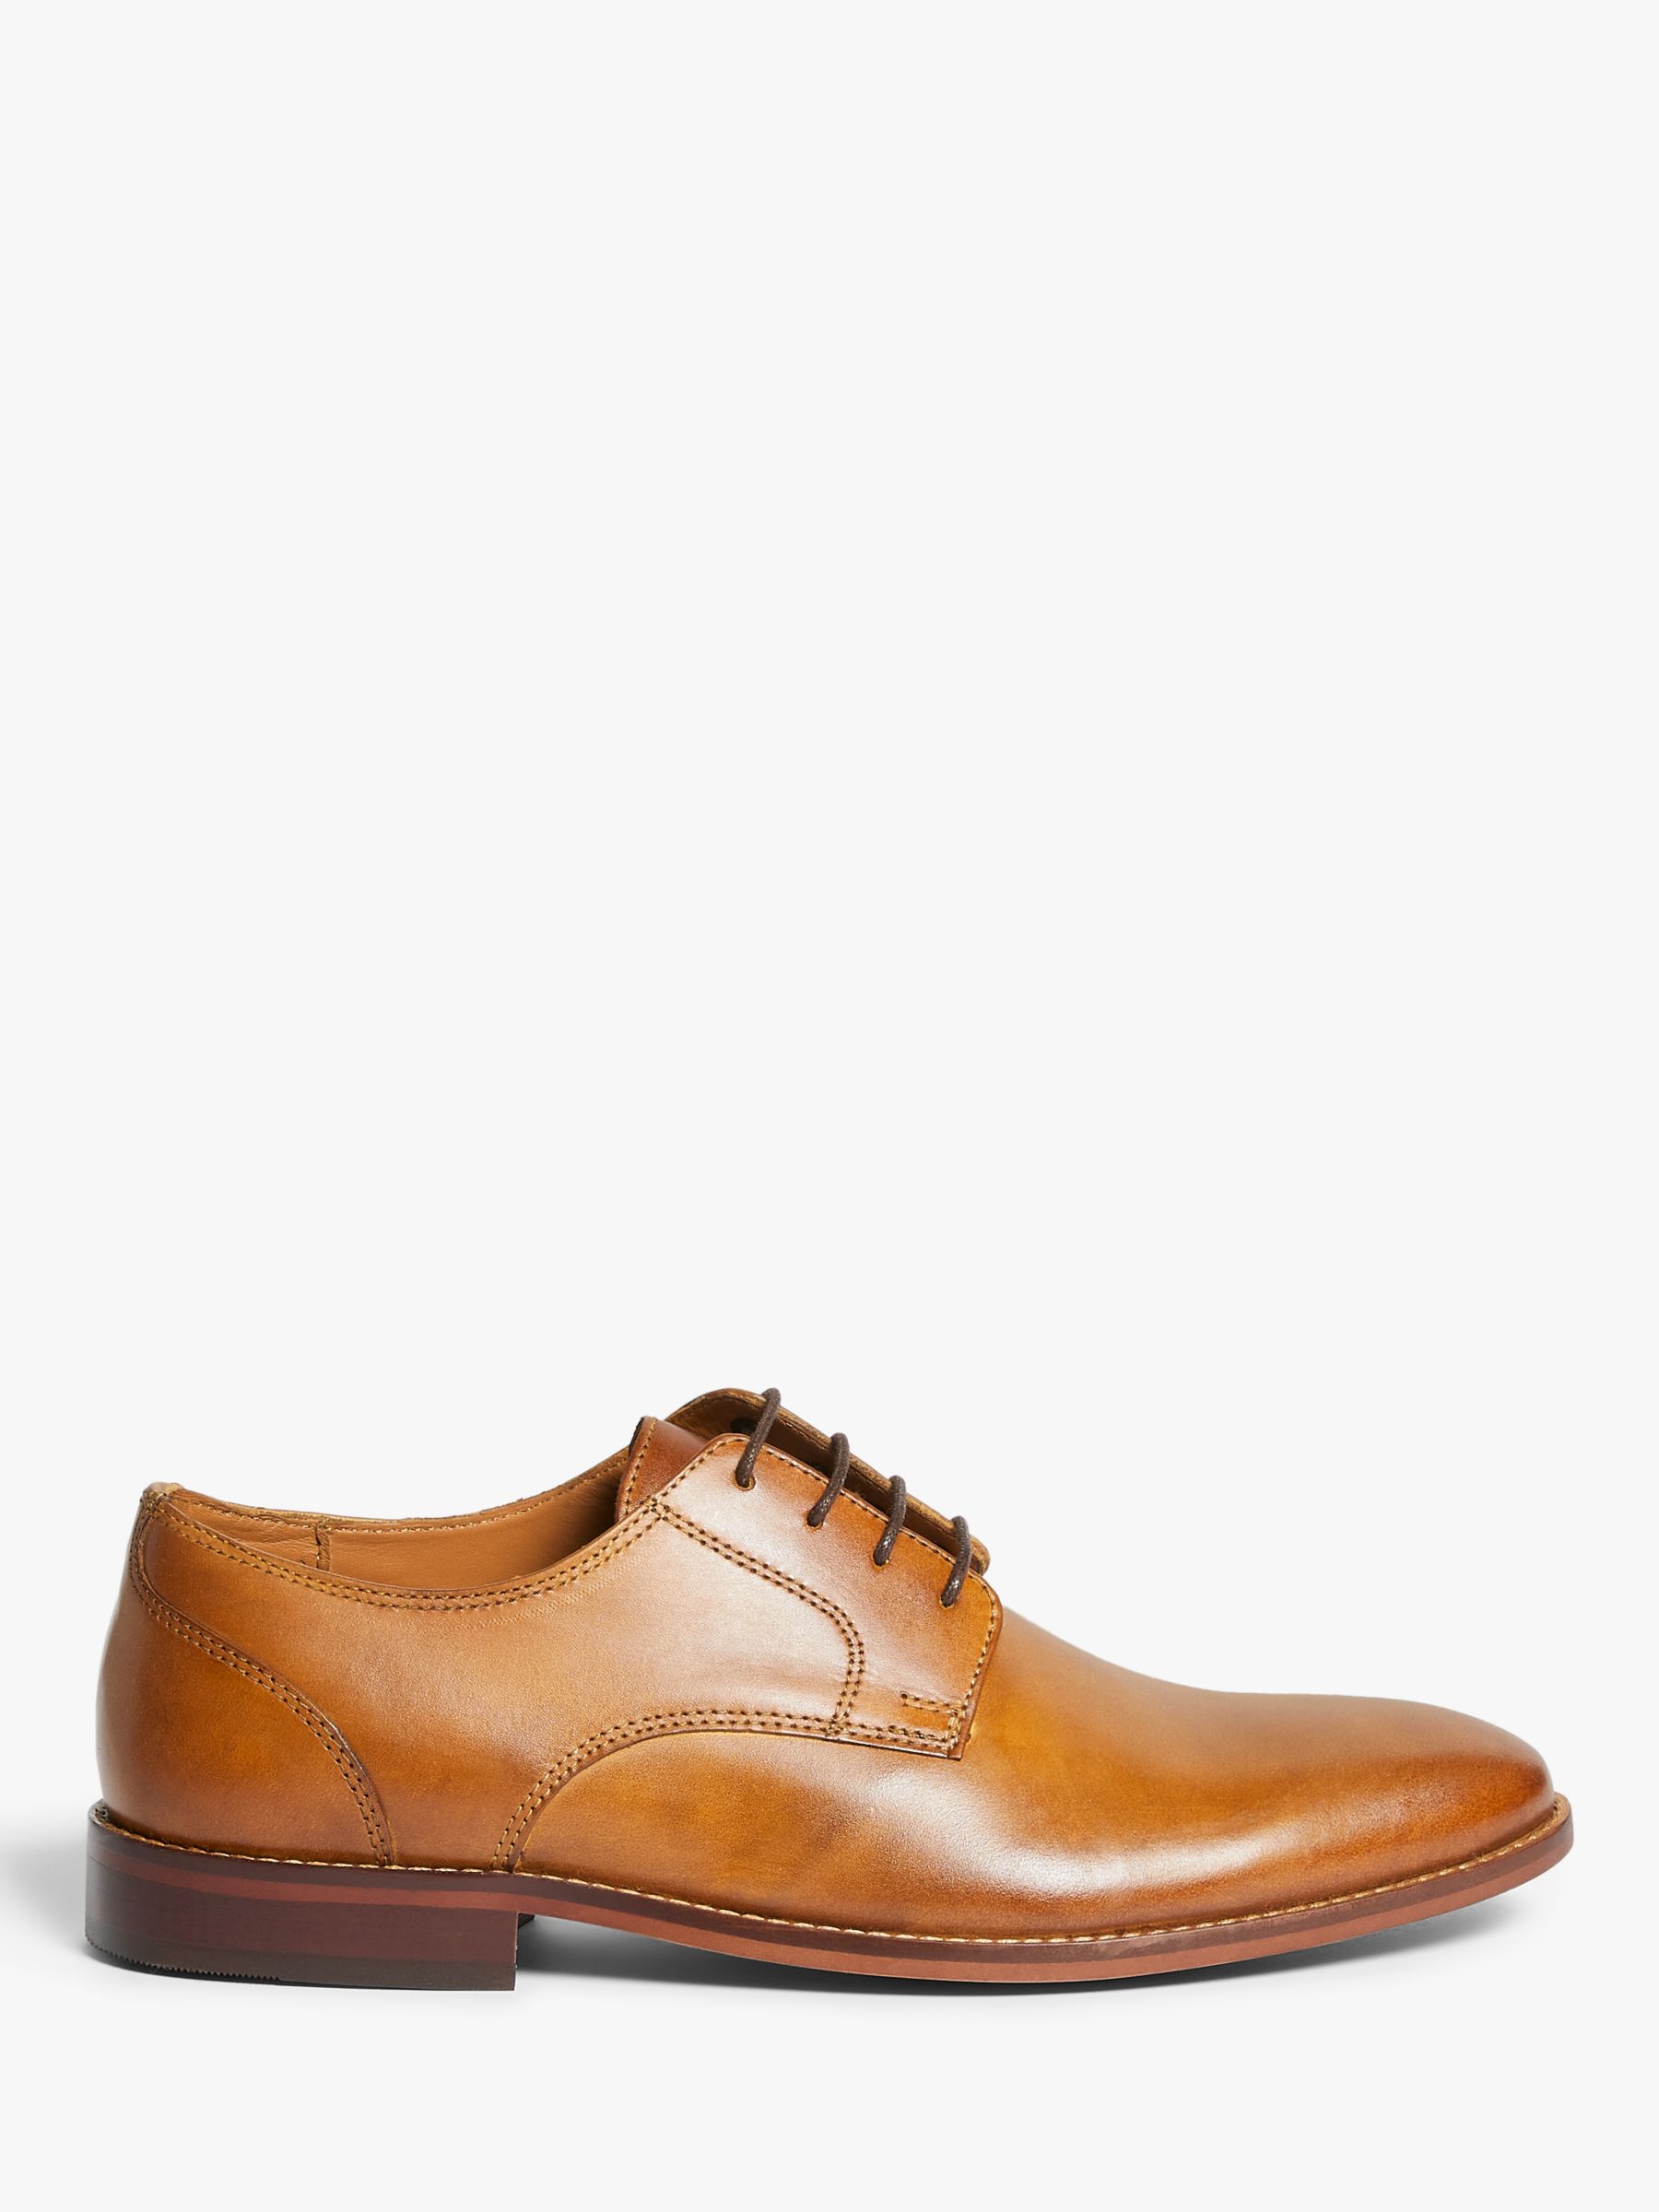 John Lewis Slim Derby Shoes, Tan, 7